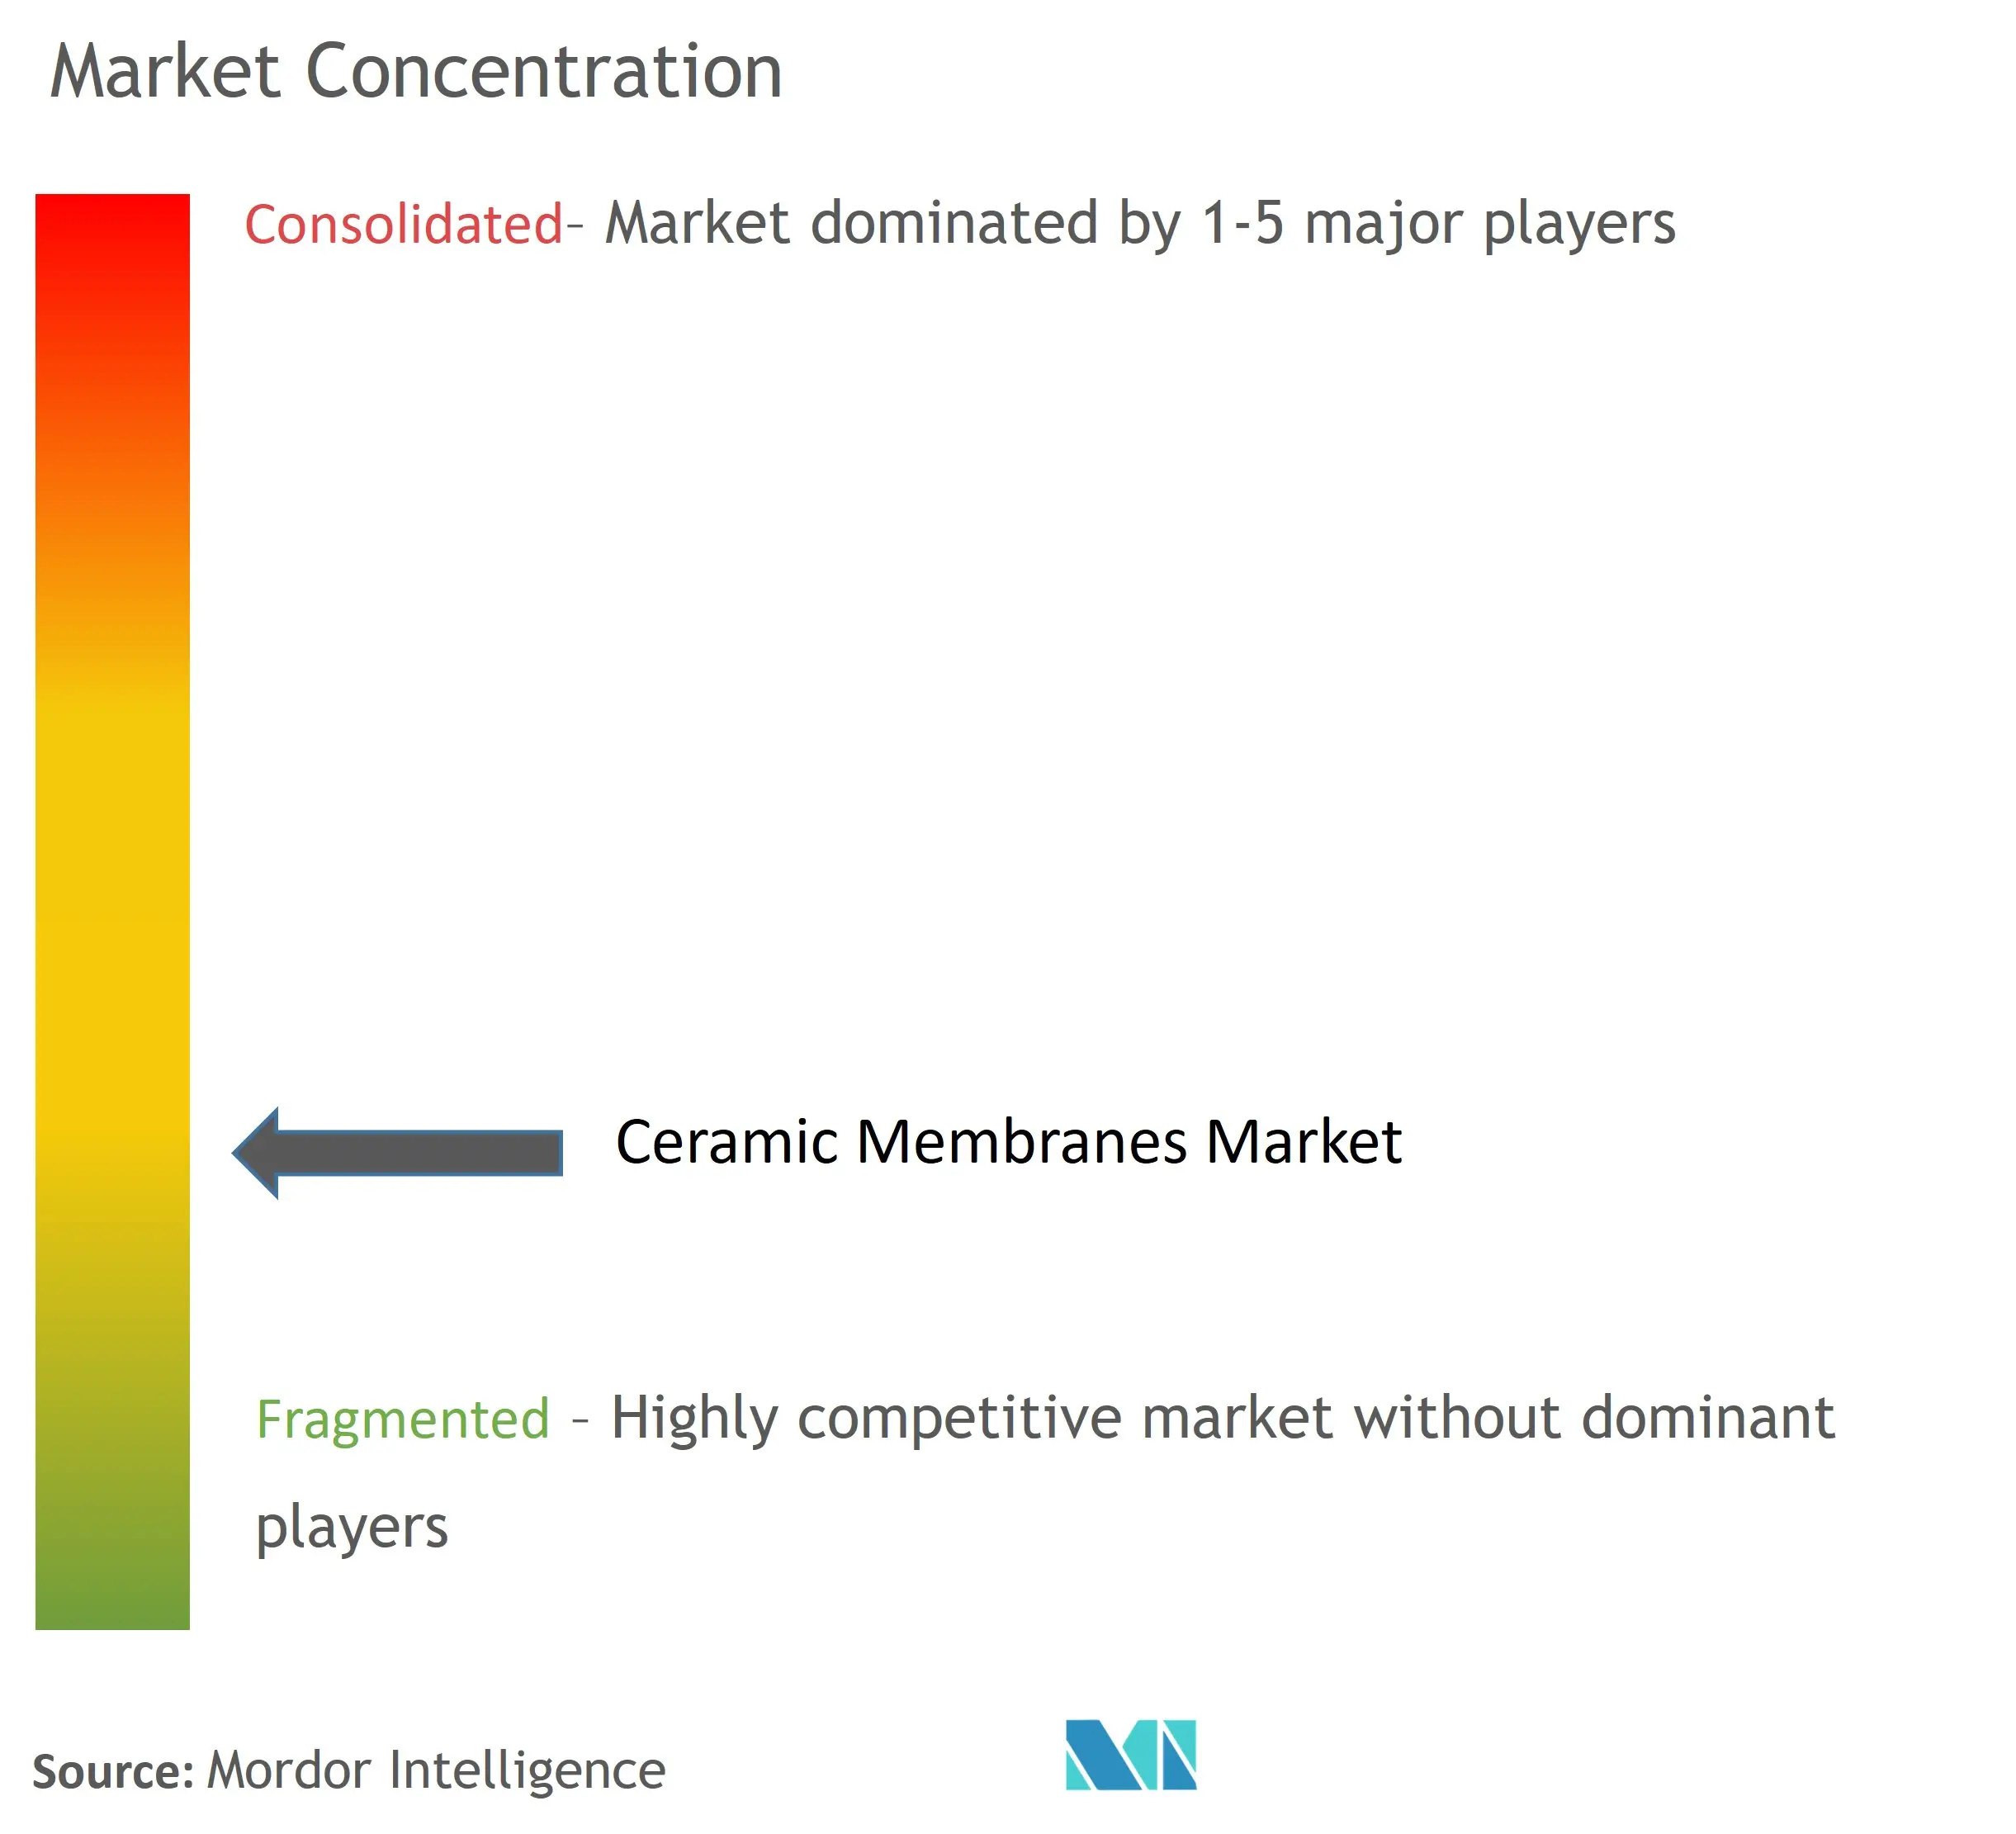 Ceramic Membranes Market Concentration